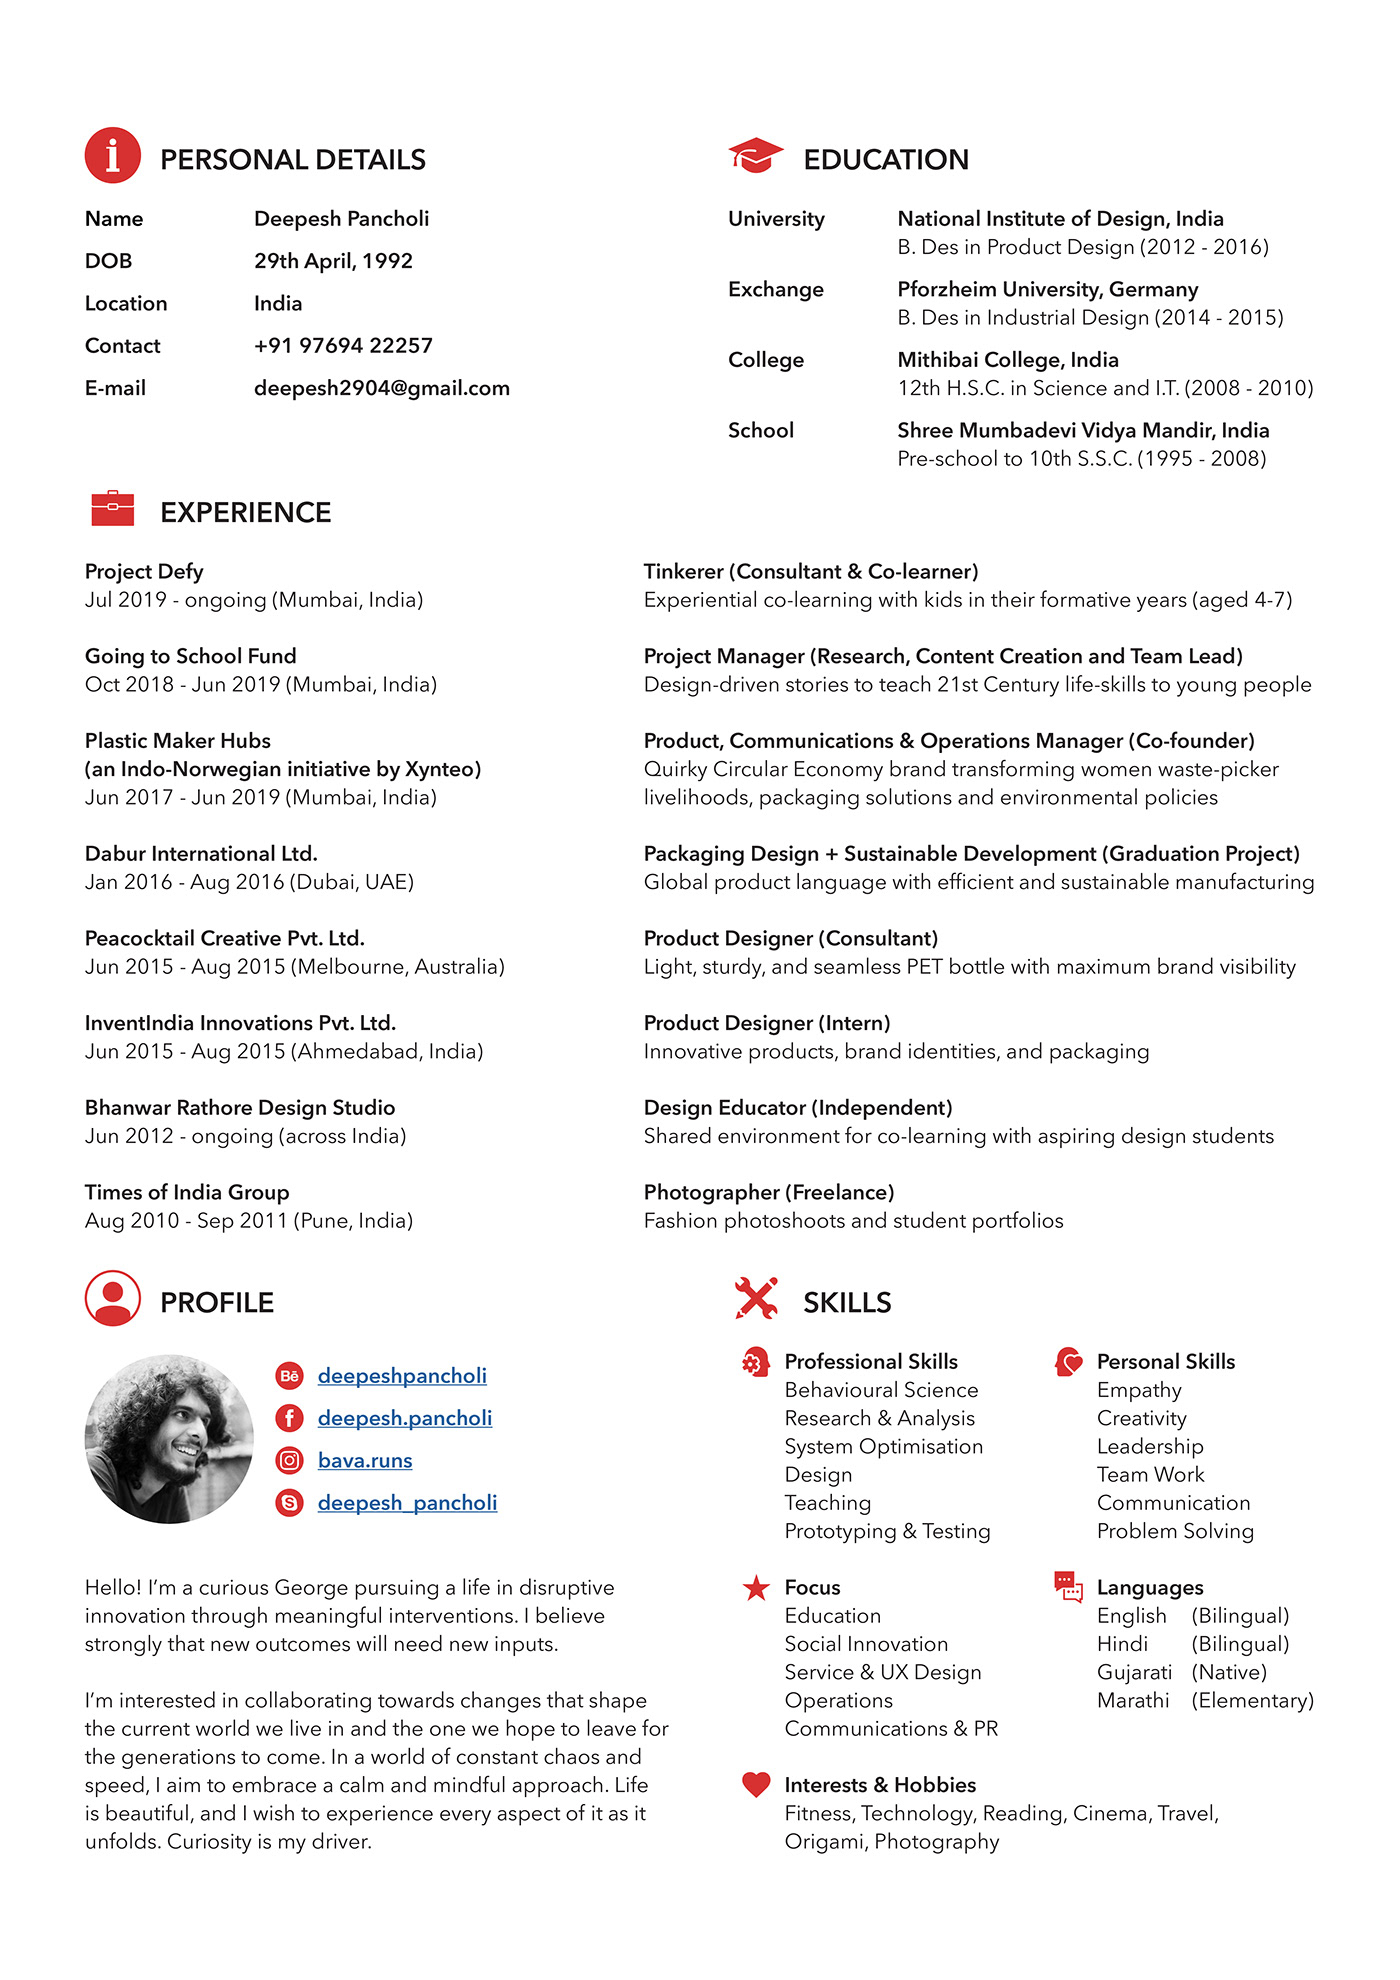 biodata CV Resume